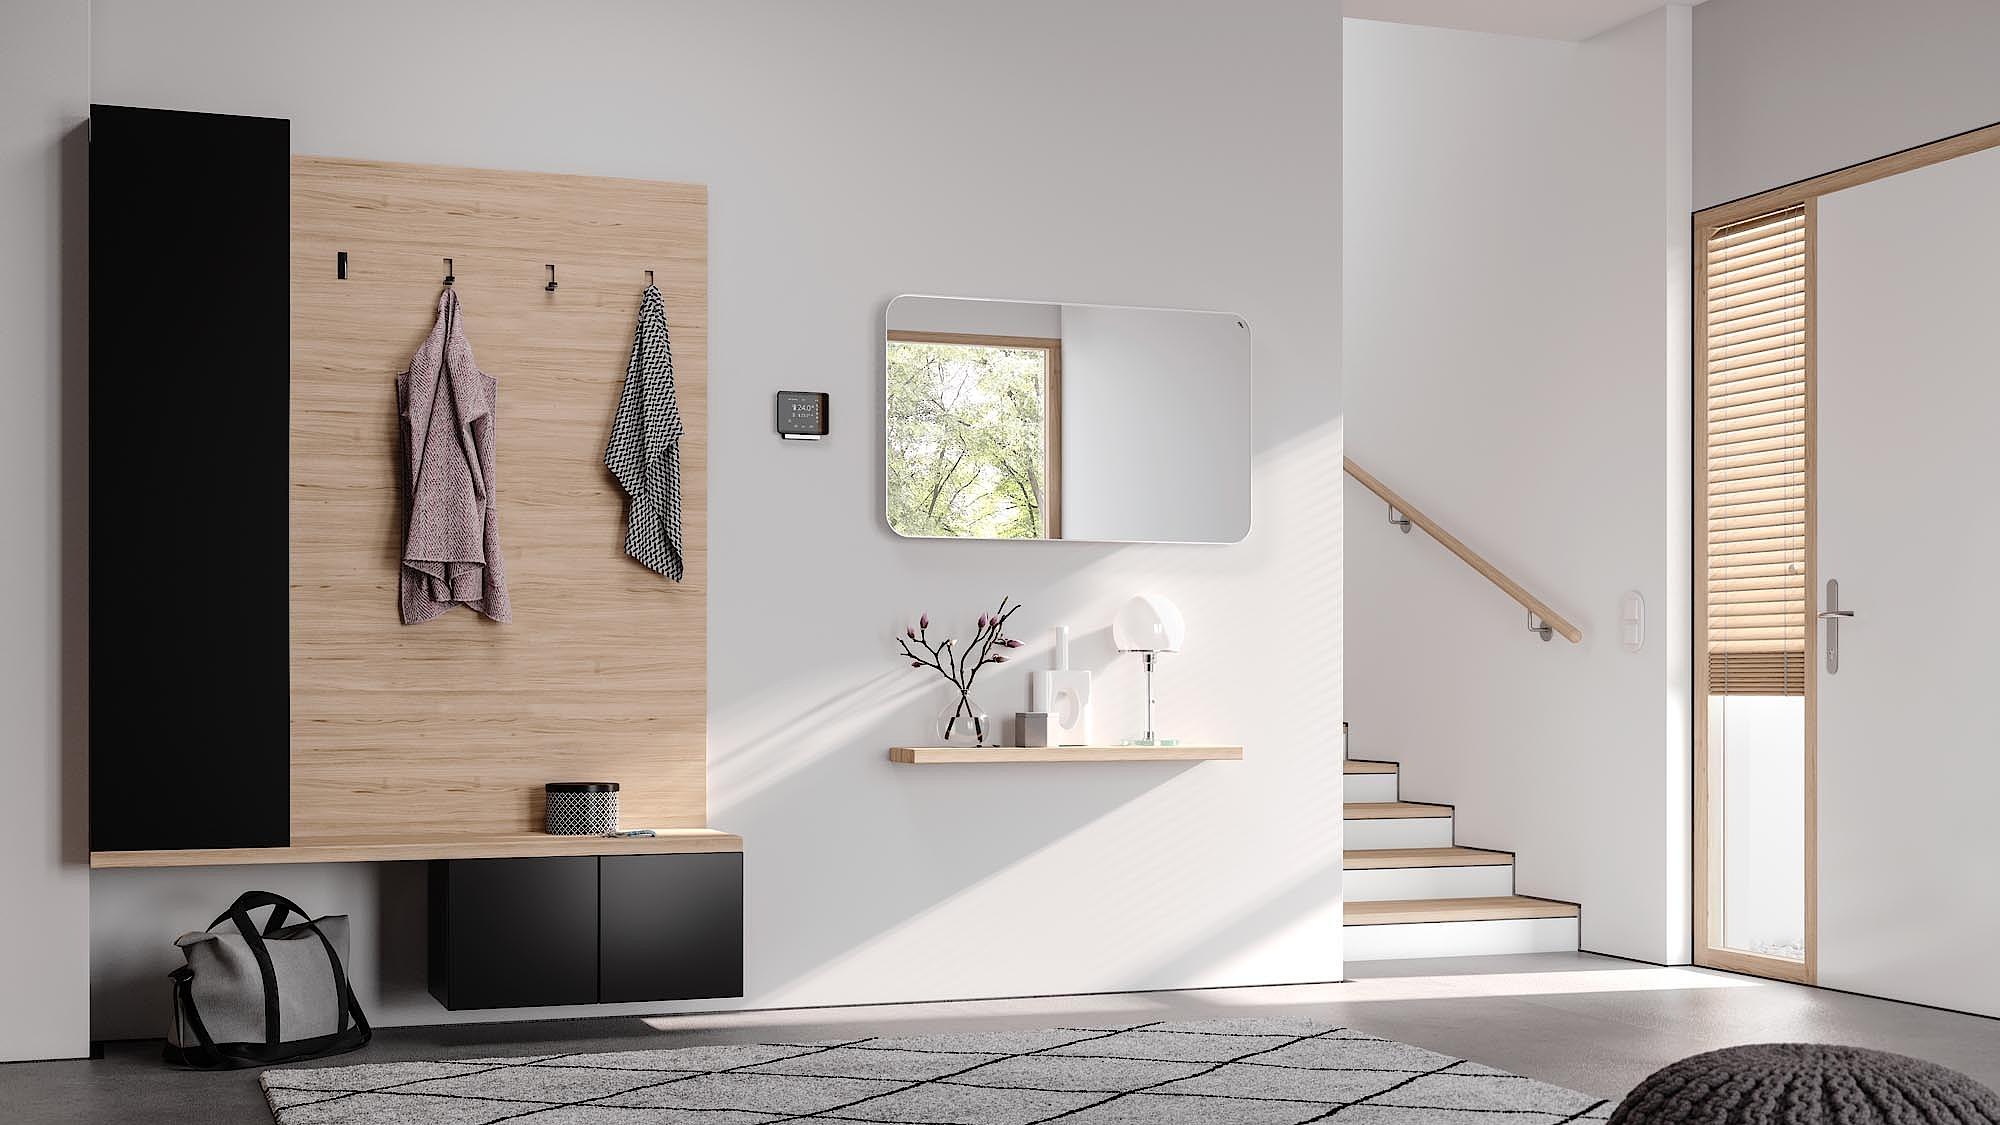 Kermi Elveo design and bathroom radiators with mirrored finish.